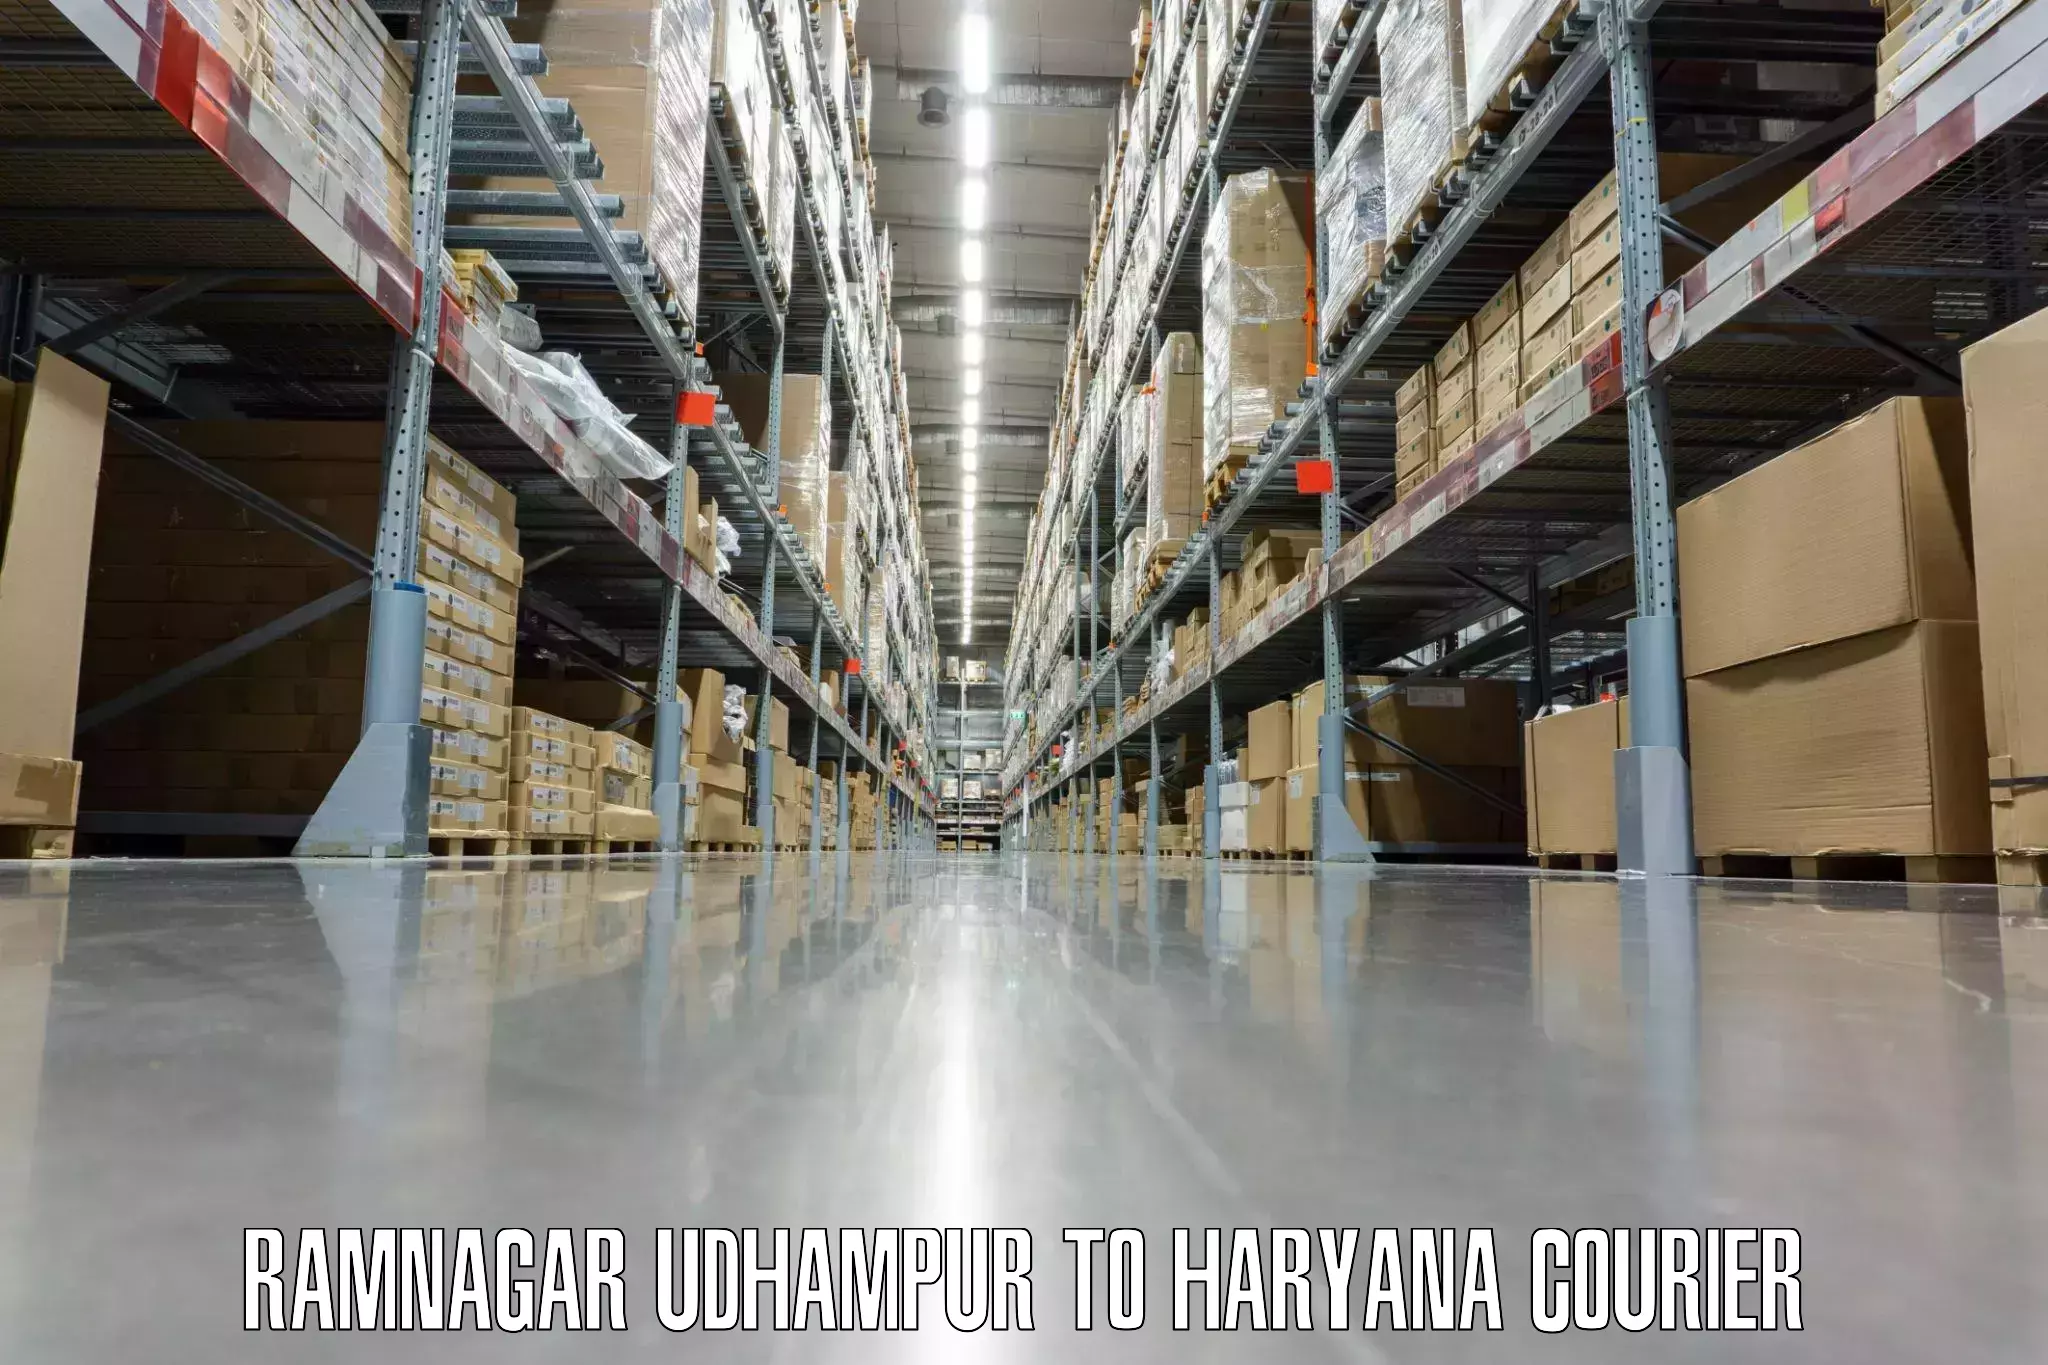 Luggage shipment specialists Ramnagar Udhampur to Haryana